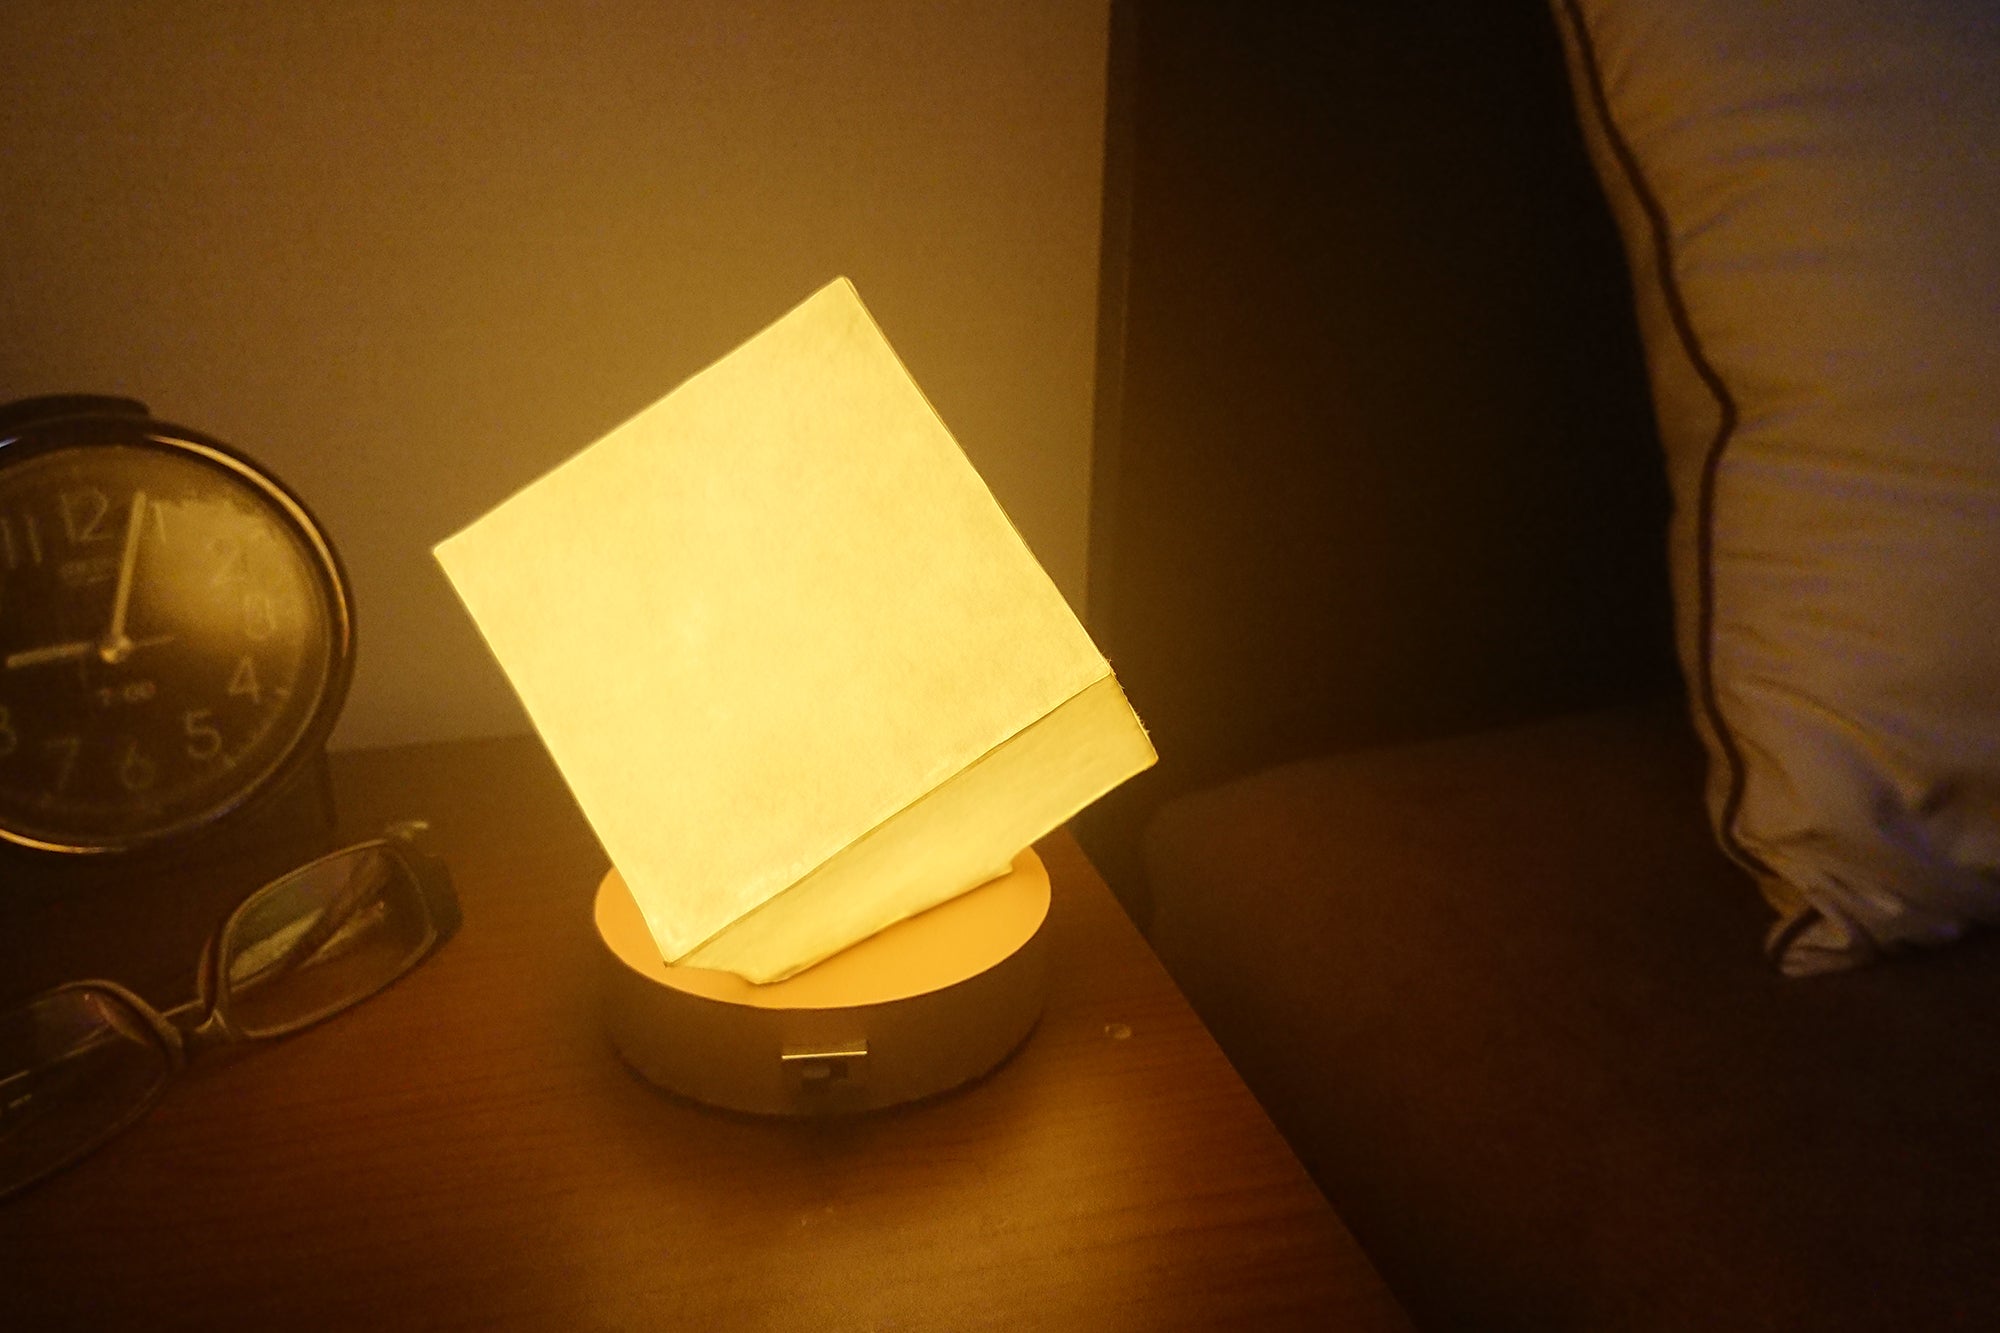 Cube-shaped Japanese paper shade night lamp